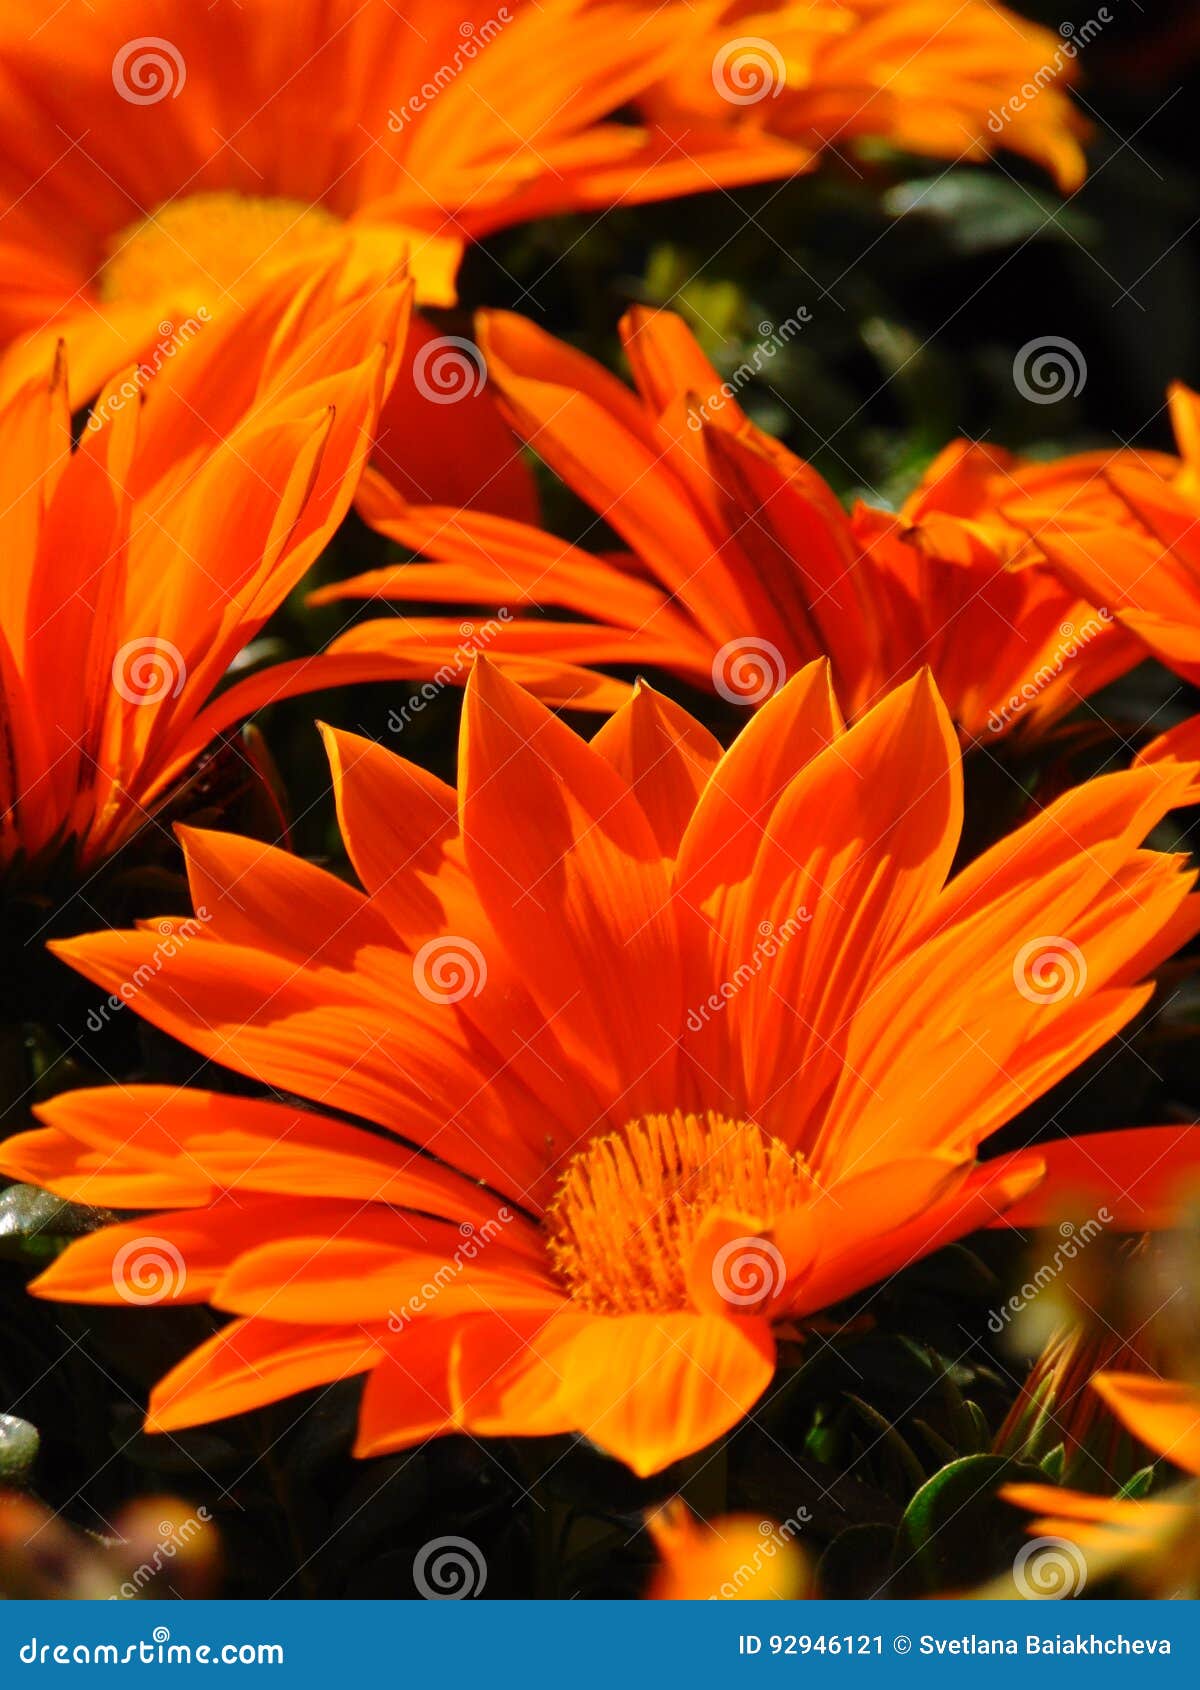 Macro Photo Background Texture Orange Hues Of The Petals 